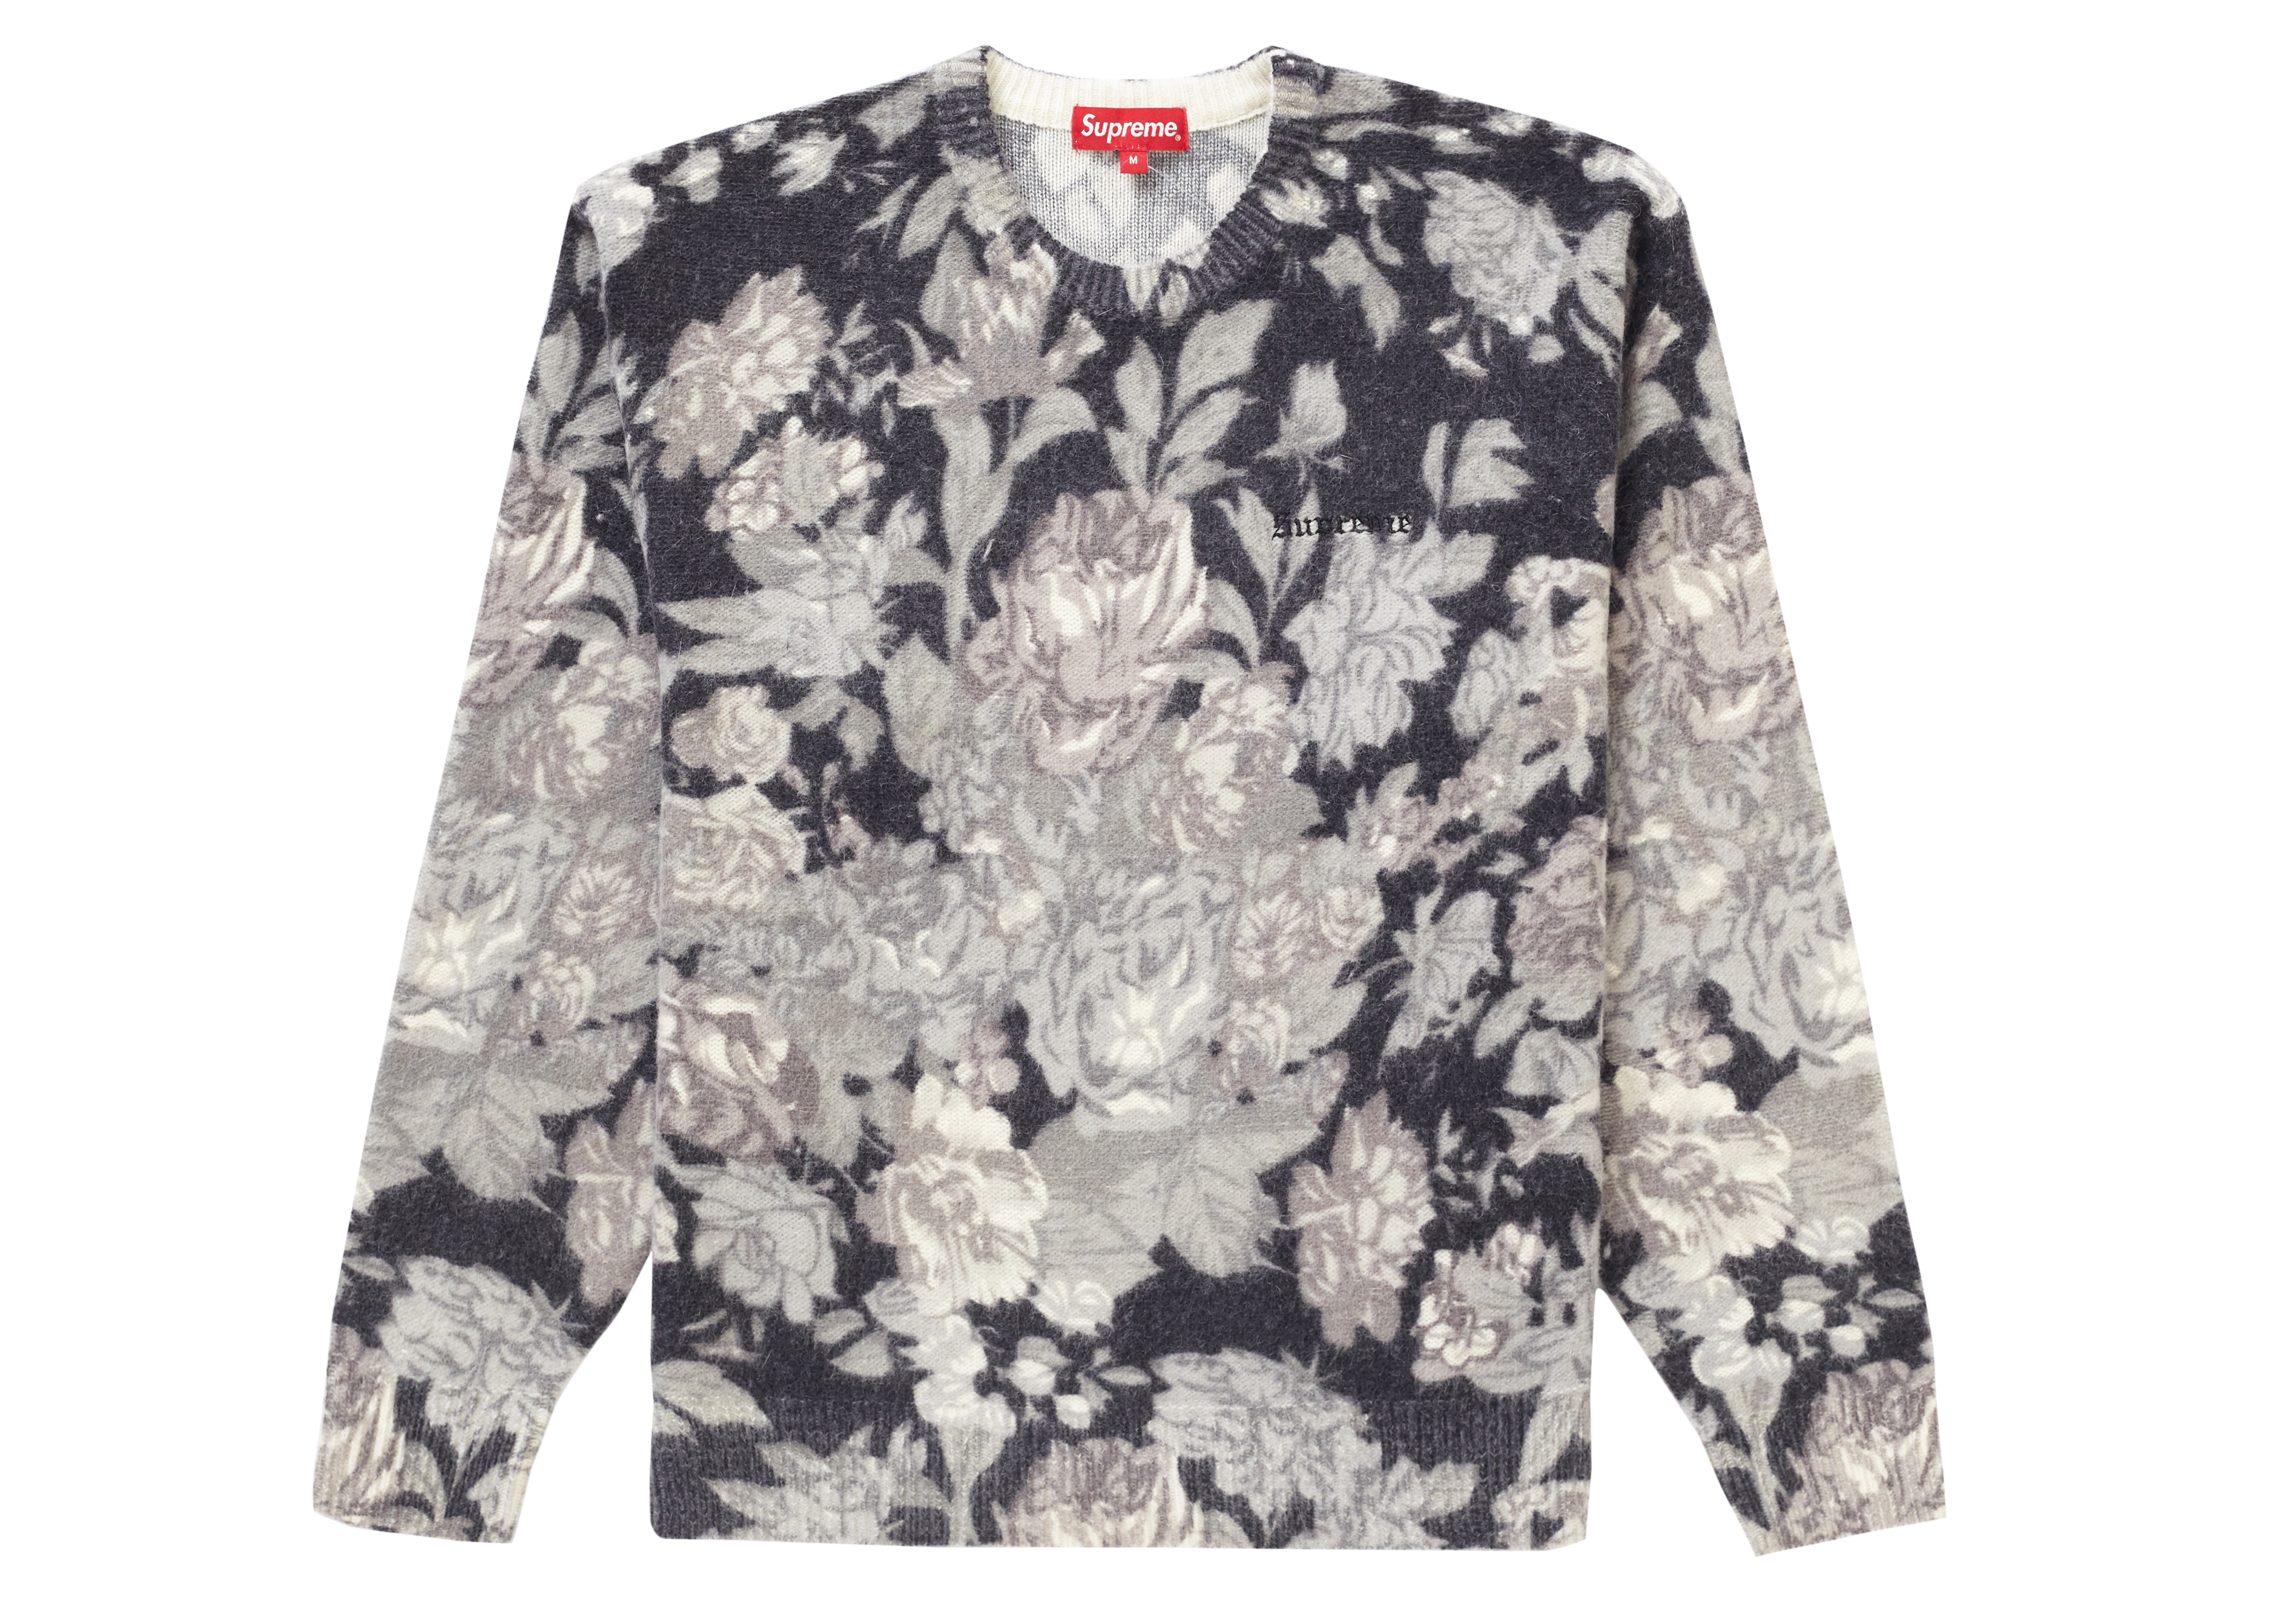 Supreme Printed Floral Angora Sweater商品の状態は良好でしょうか